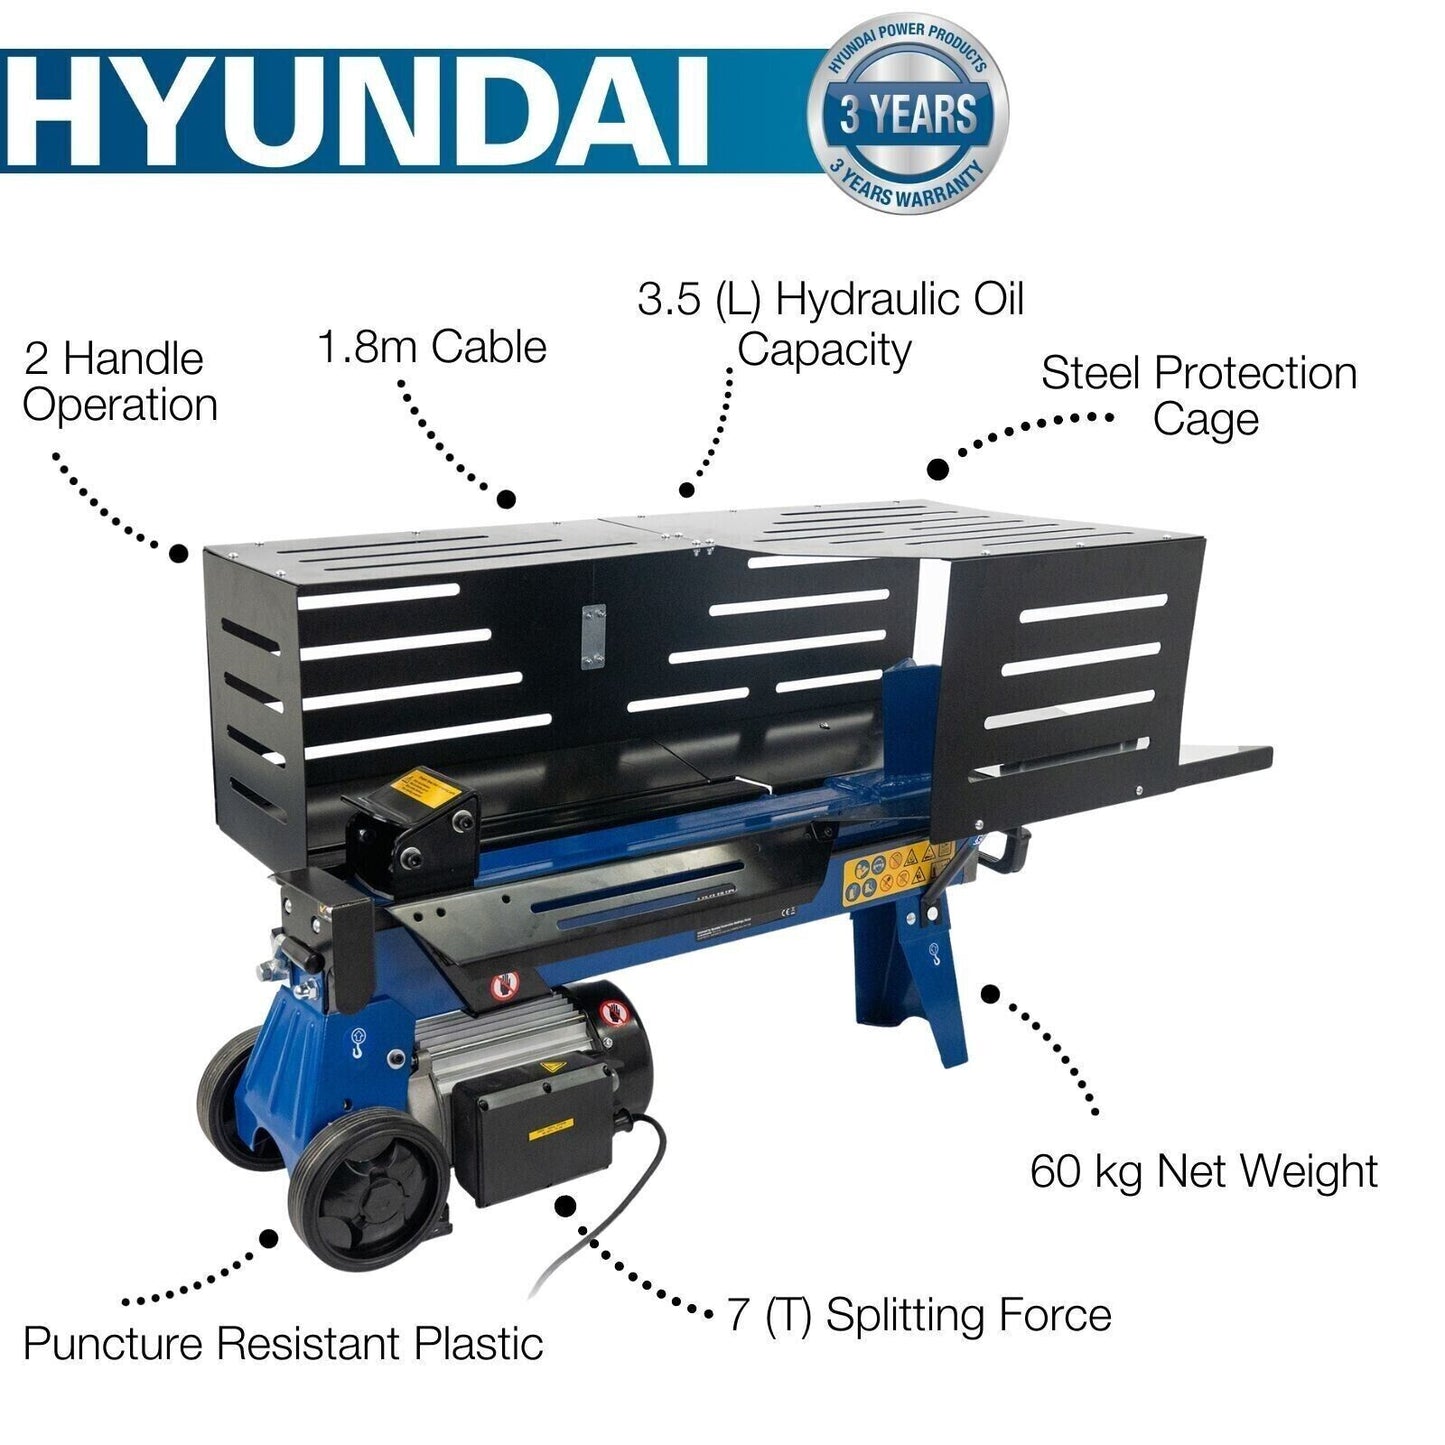 Hyundai HYLS7000HE Electric Log Splitter 7 Tonne Horizontal Hydraulic Ram 250mm